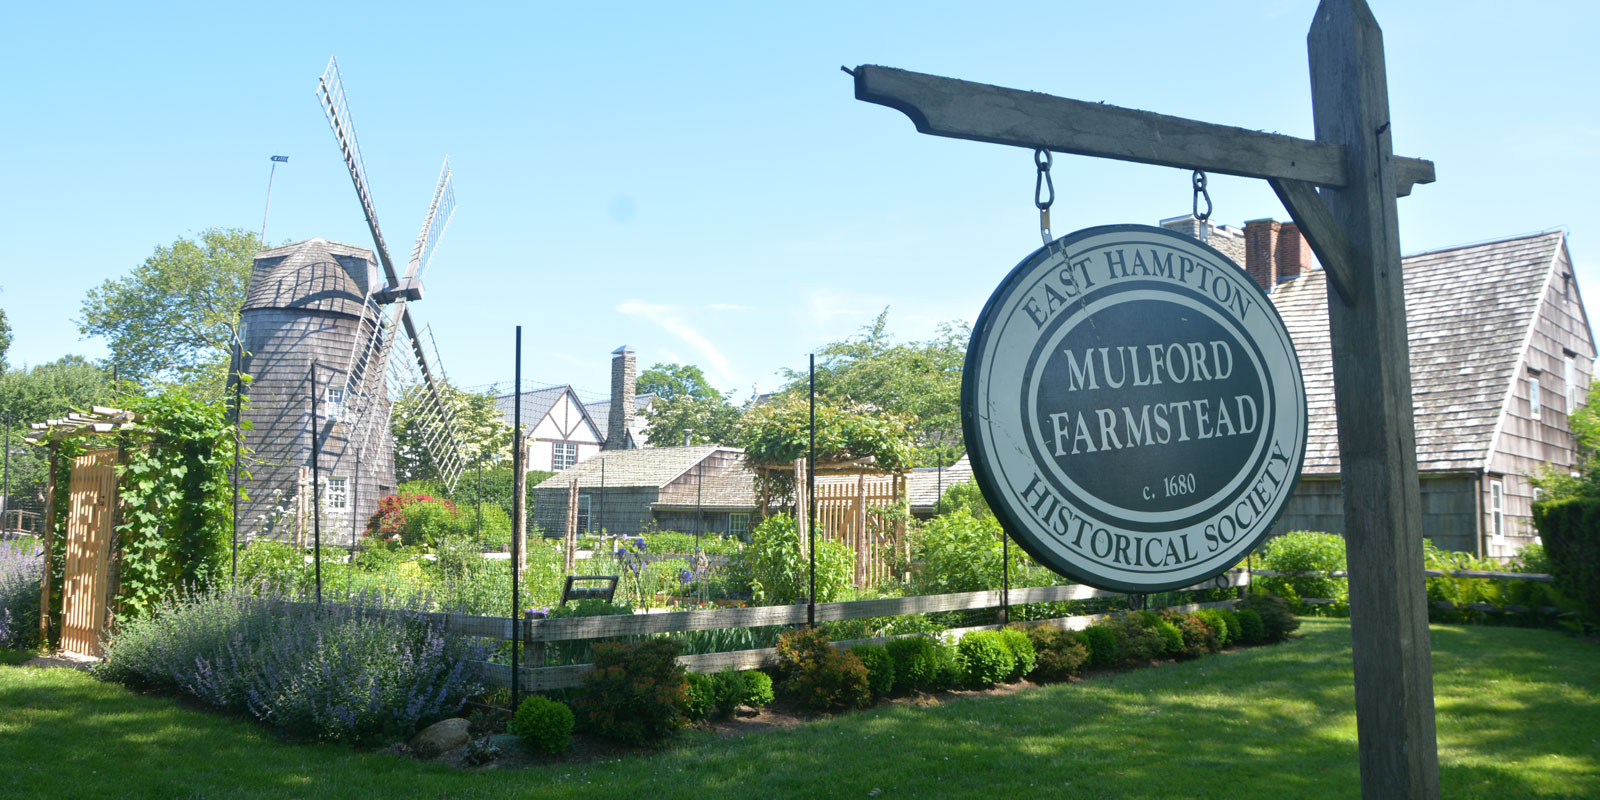 East Hampton Historical Society Muford Farmstead